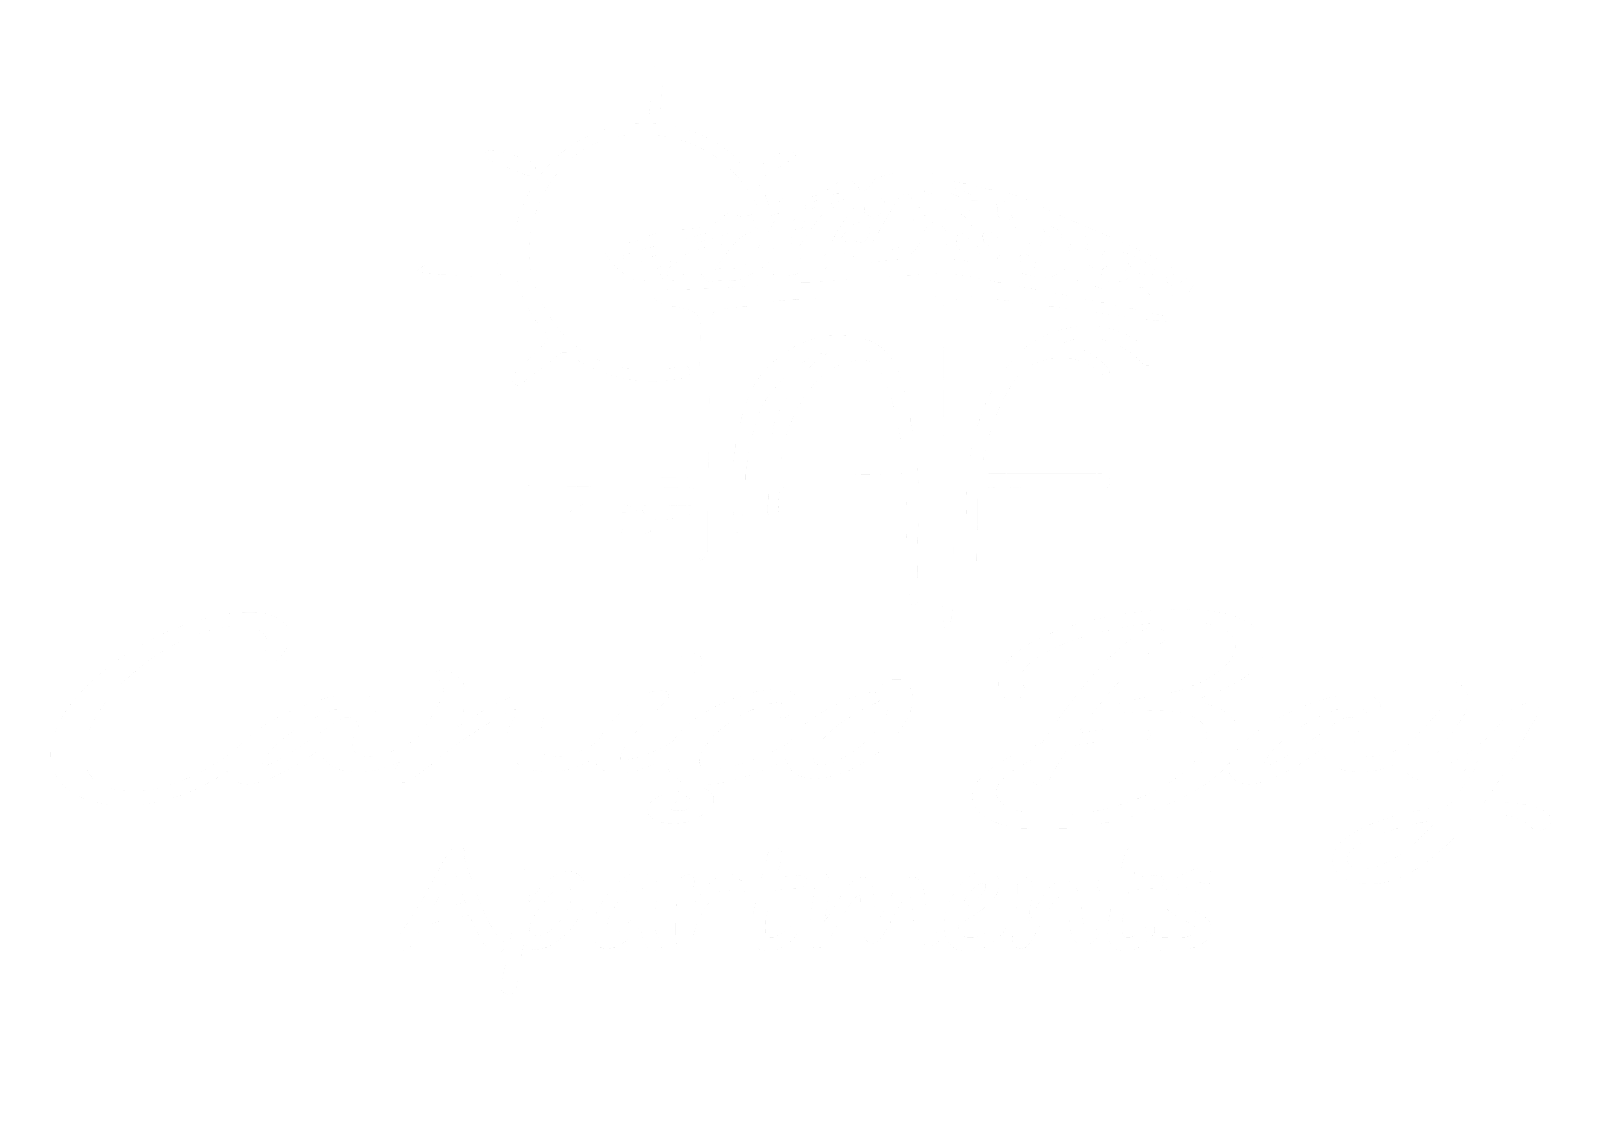 Contato - Caniço Bay Apartments